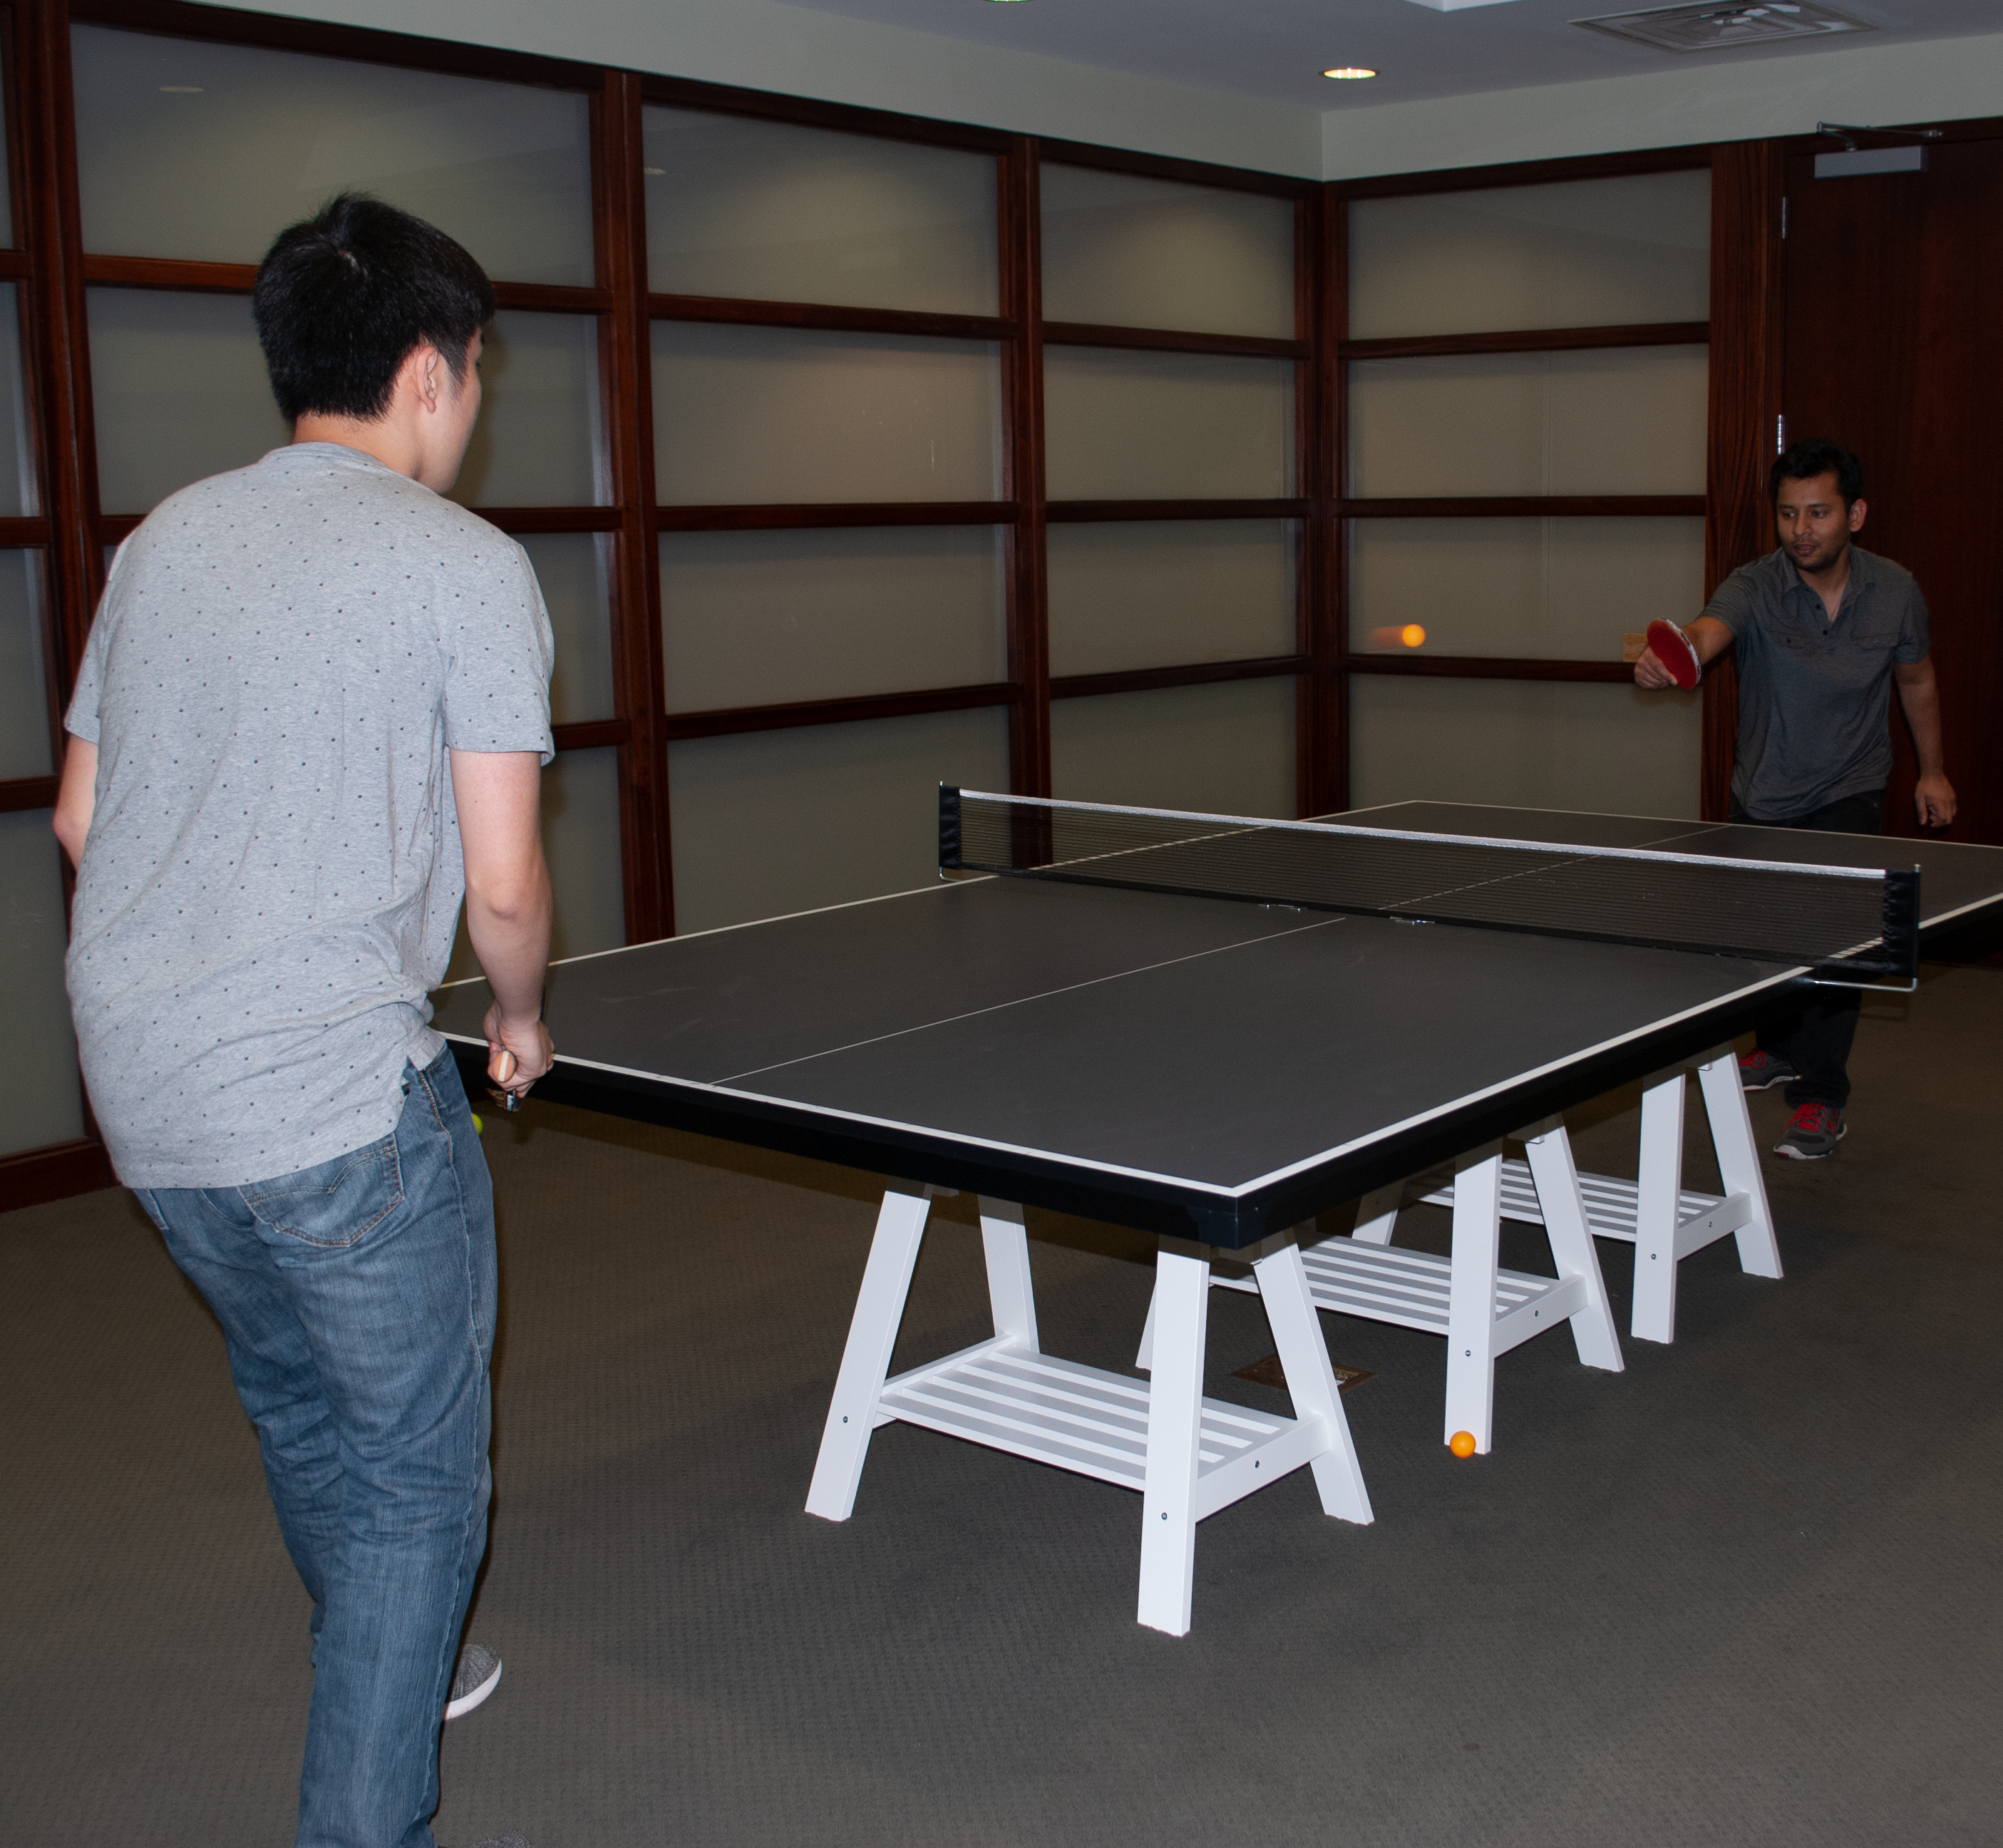 Ping pong tournament